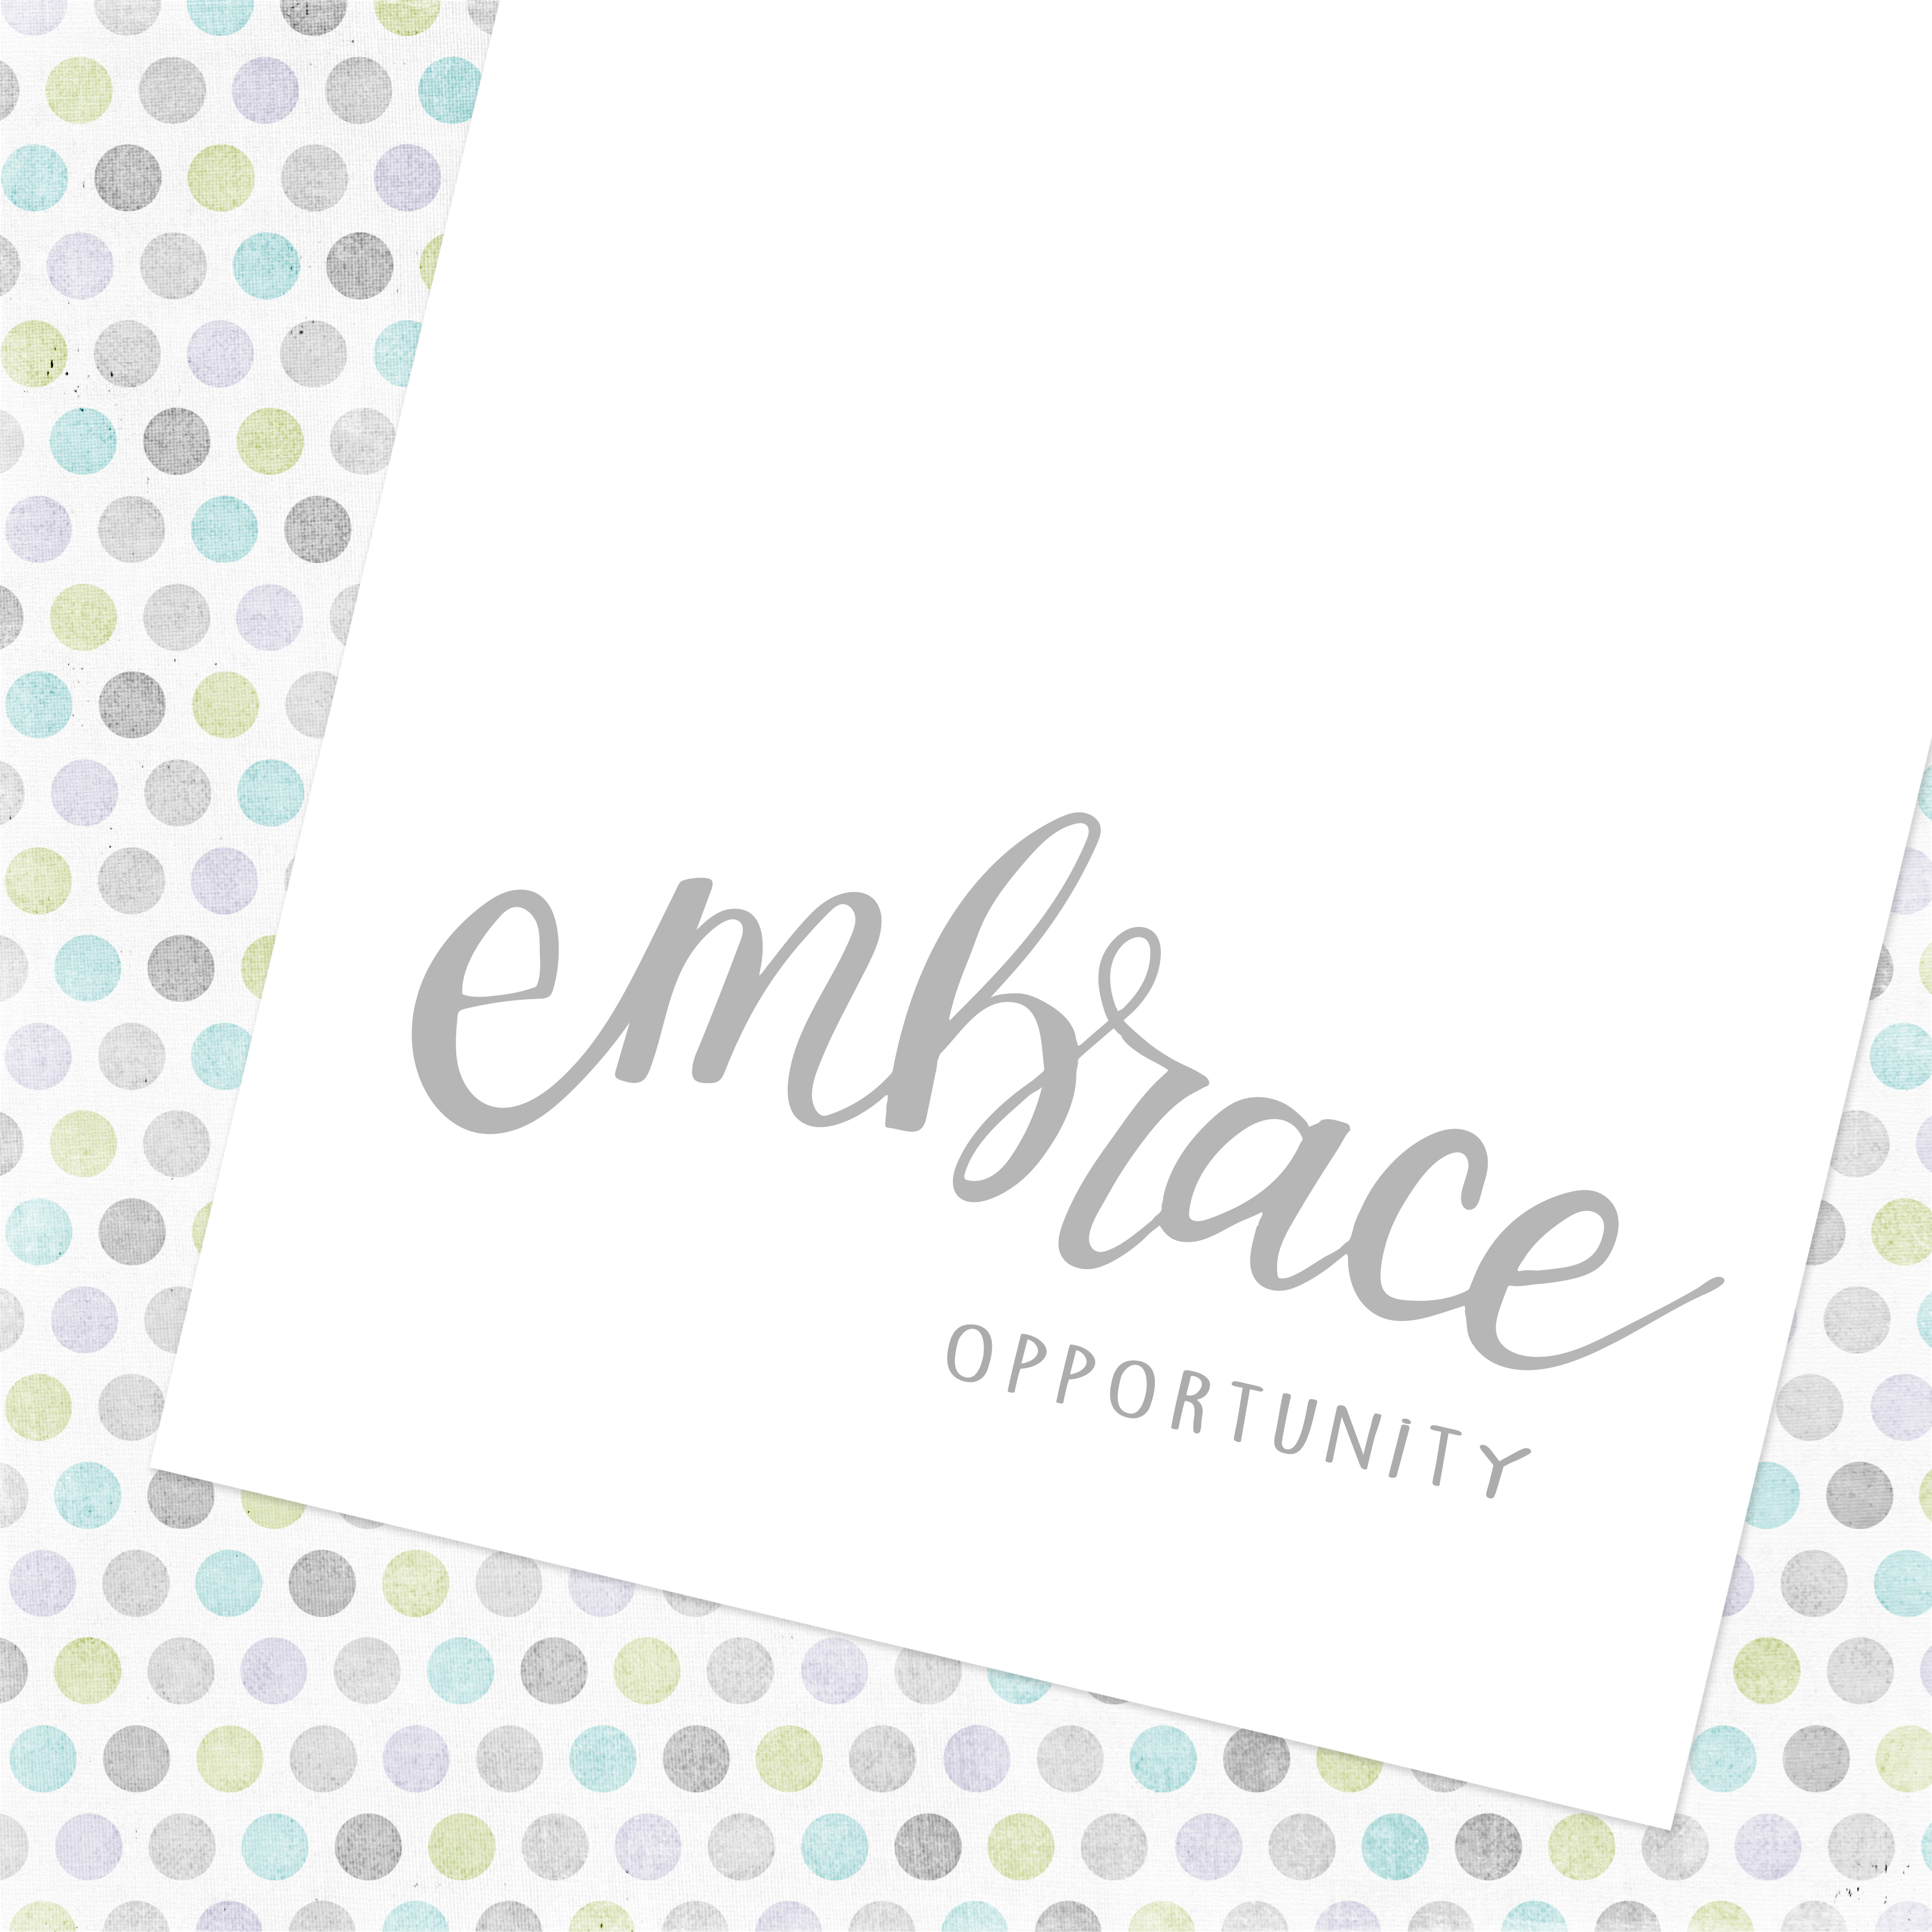 embrace opportunity